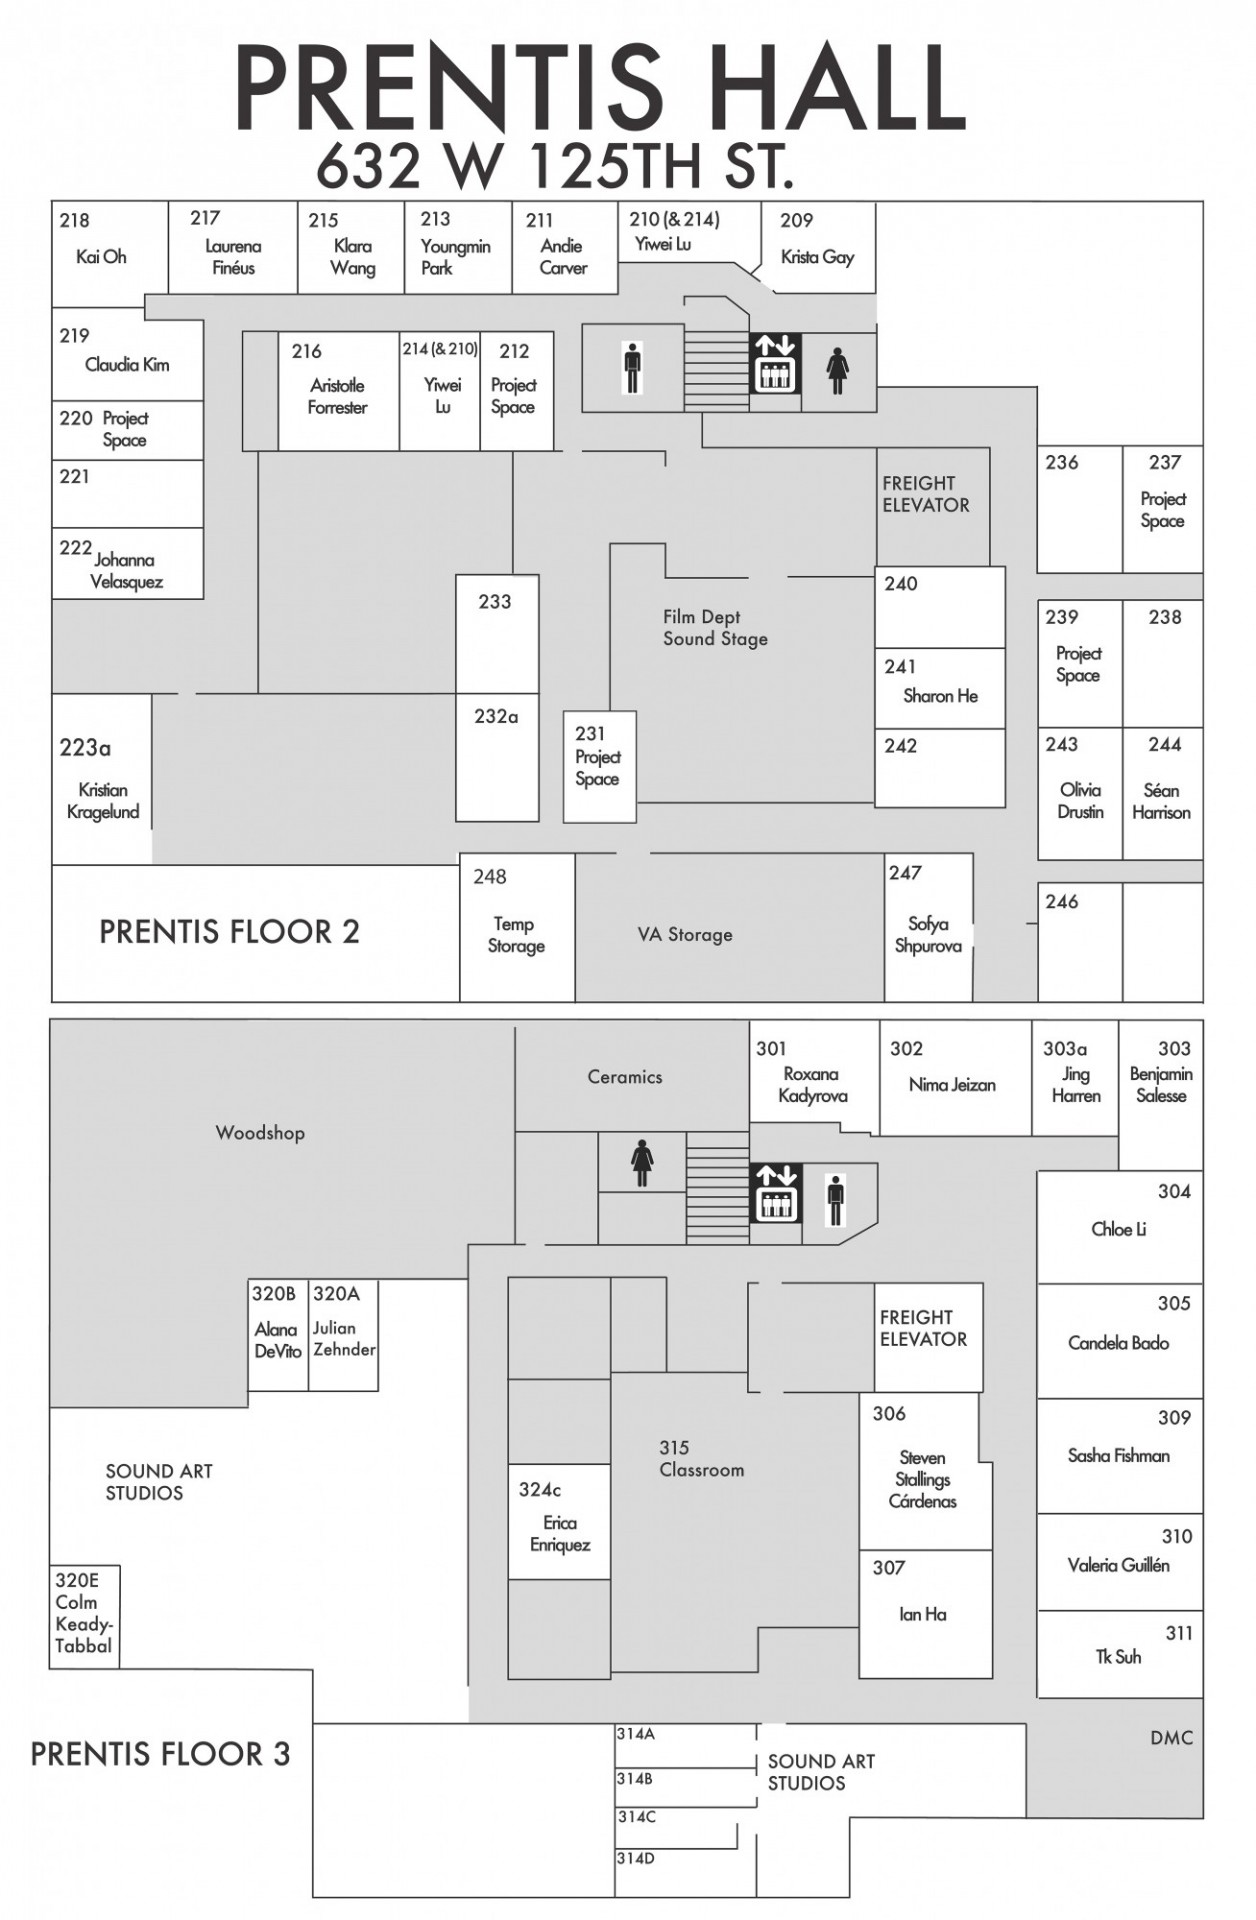 Prentis Hall Studio Map